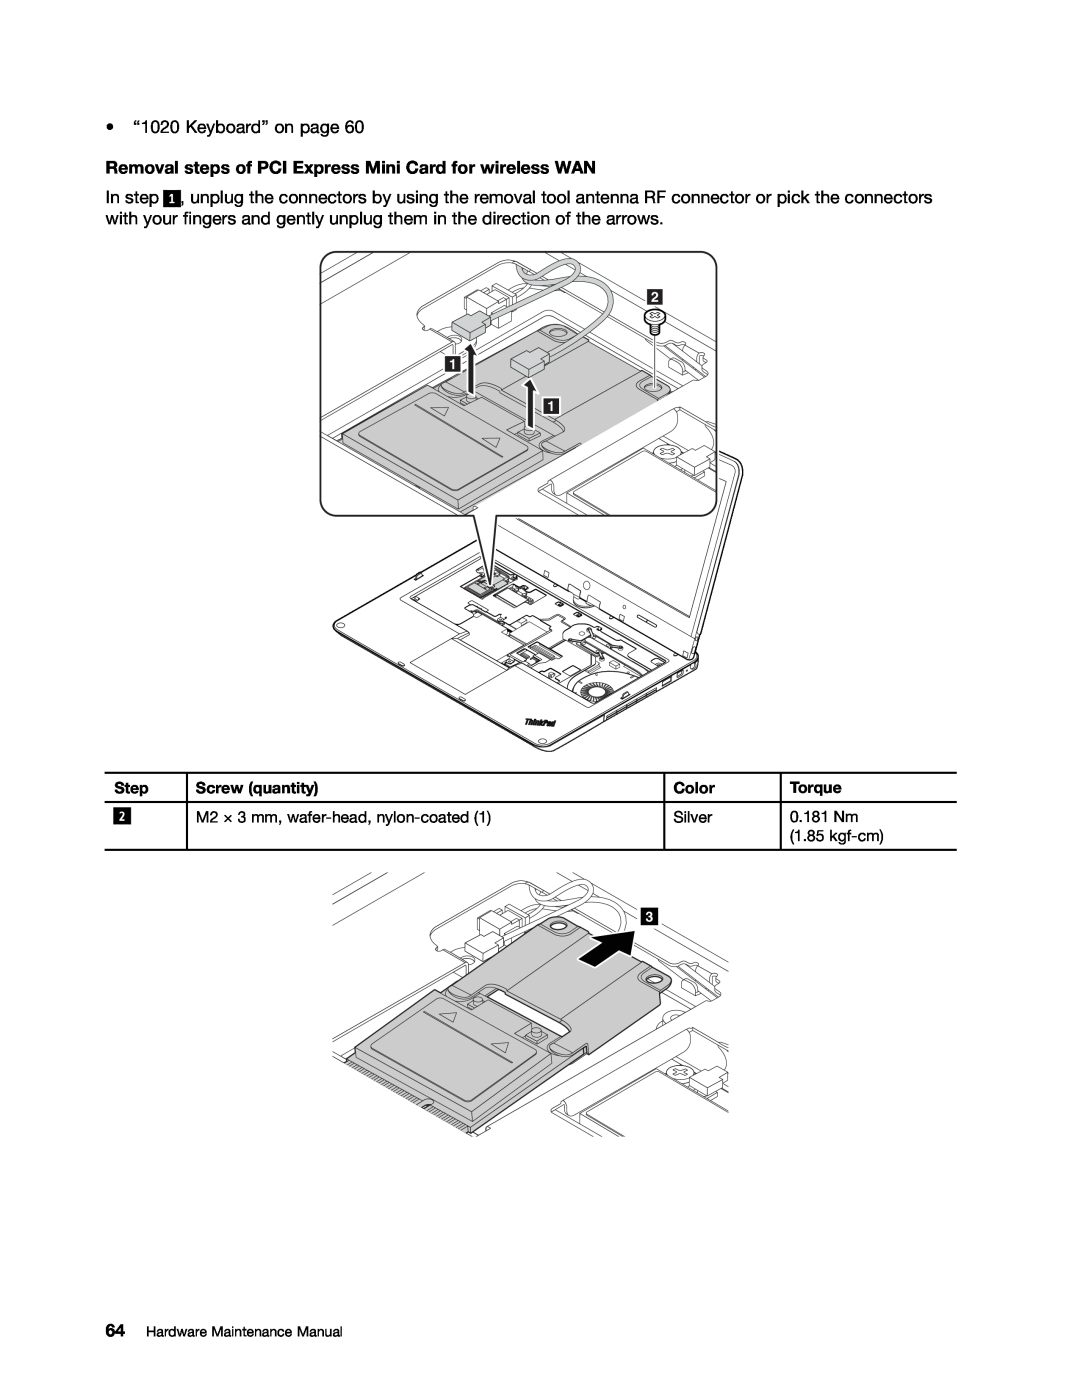 Lenovo S230U, 33472YU Removal steps of PCI Express Mini Card for wireless WAN, Step, Screw quantity, Color, Torque, kgf-cm 